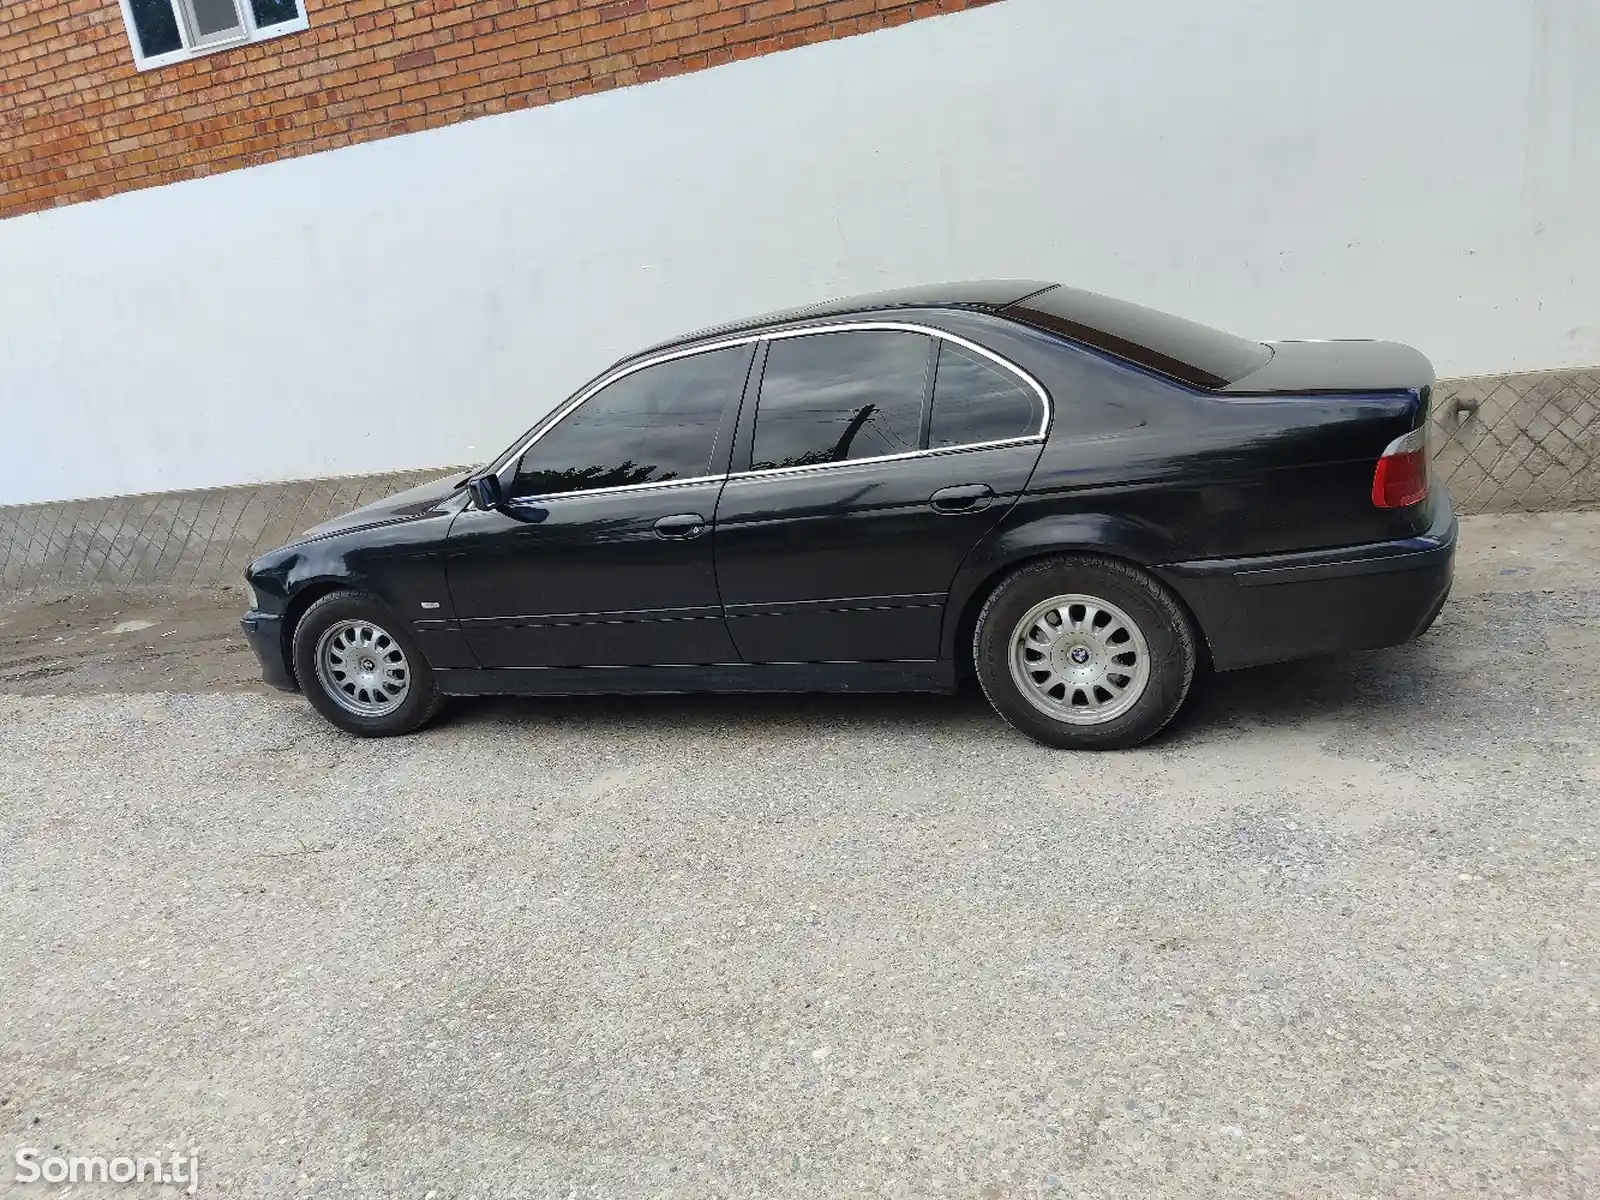 BMW 5 series, 1999-2